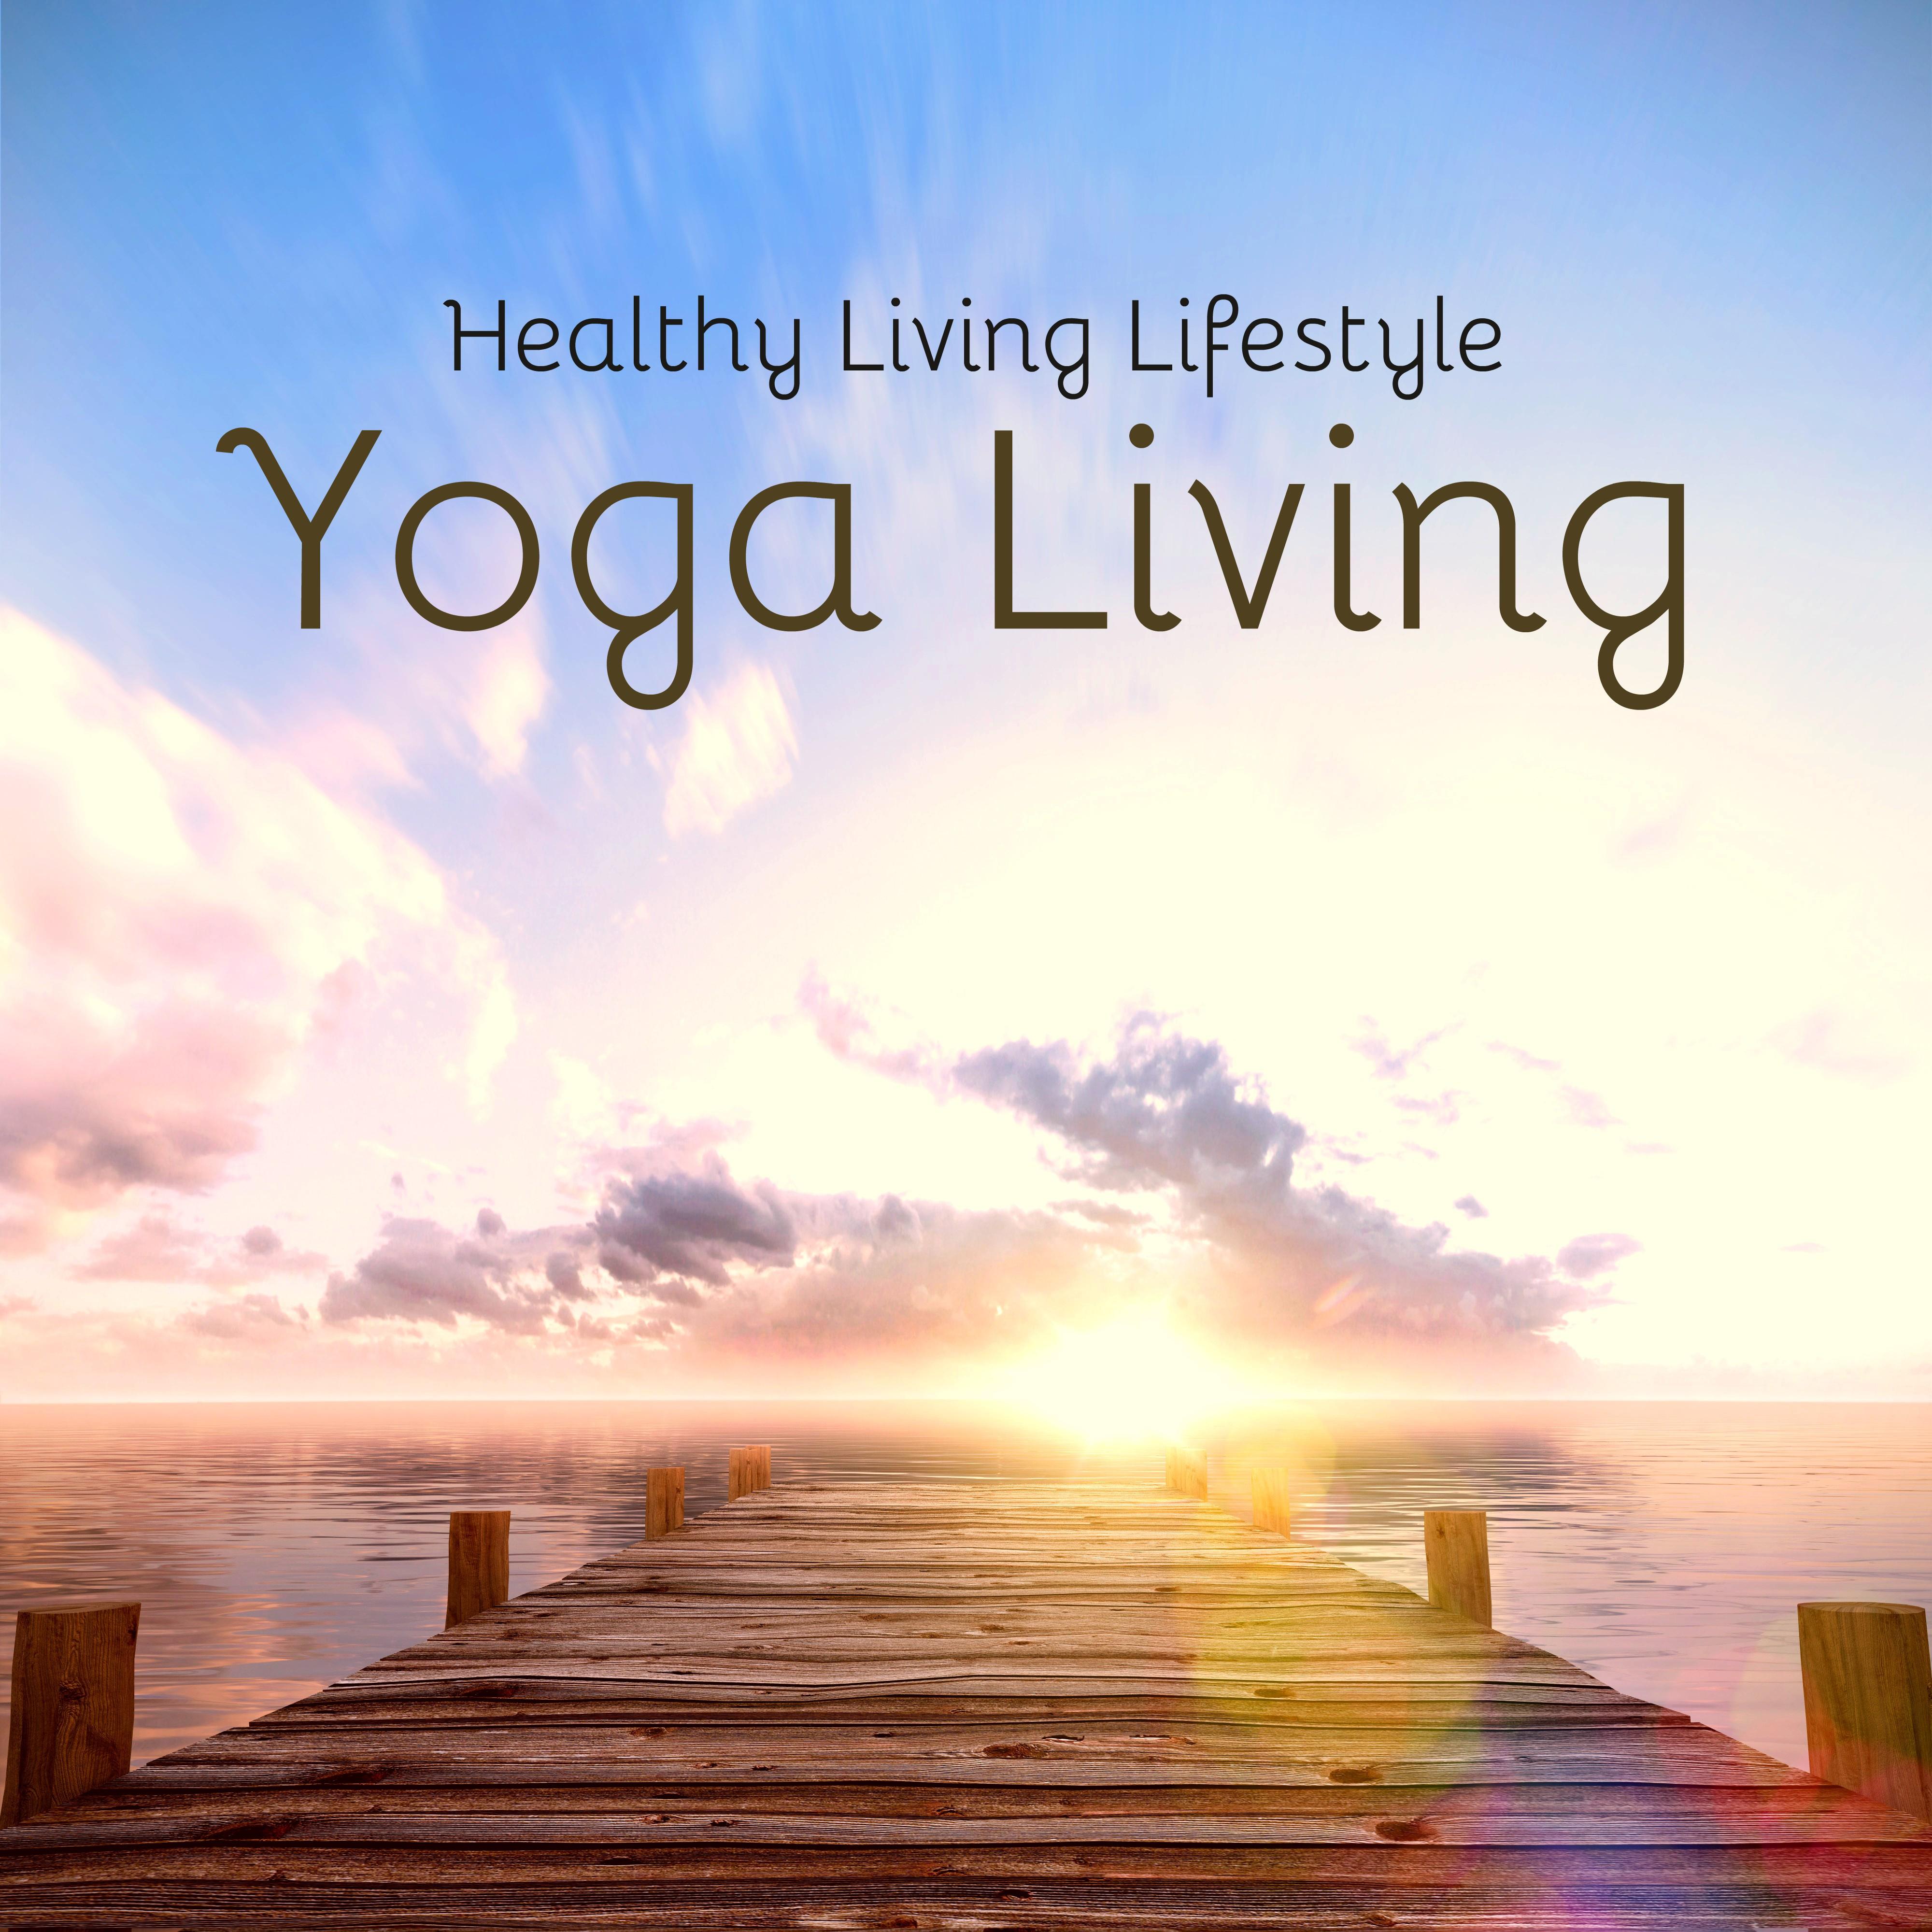 Yoga Living